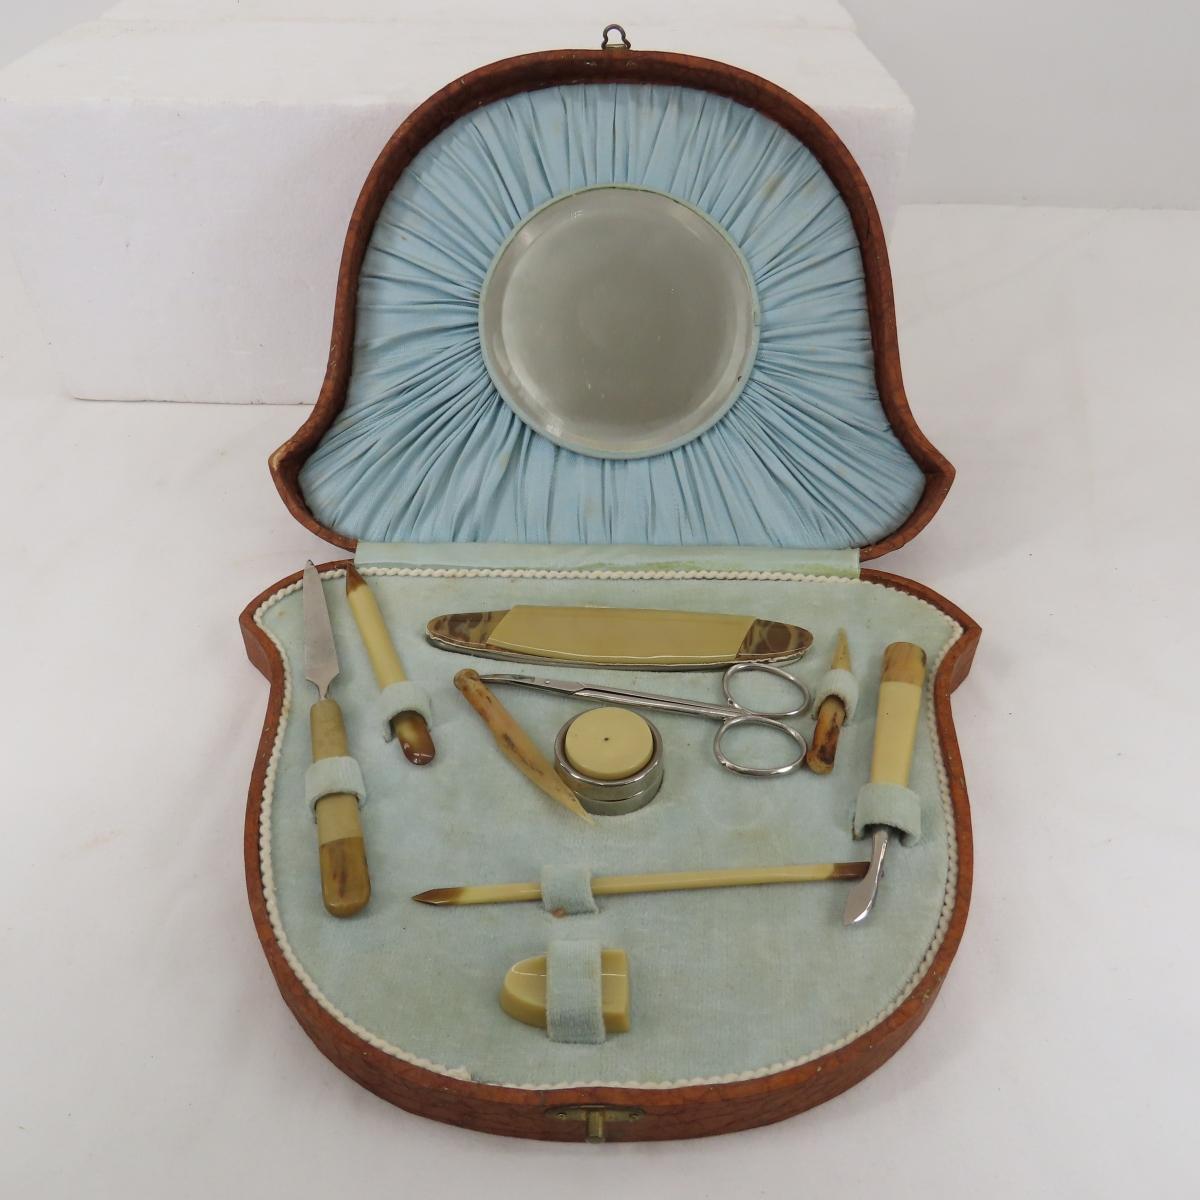 Antique Manicure Sets, Brush & Powder Jar